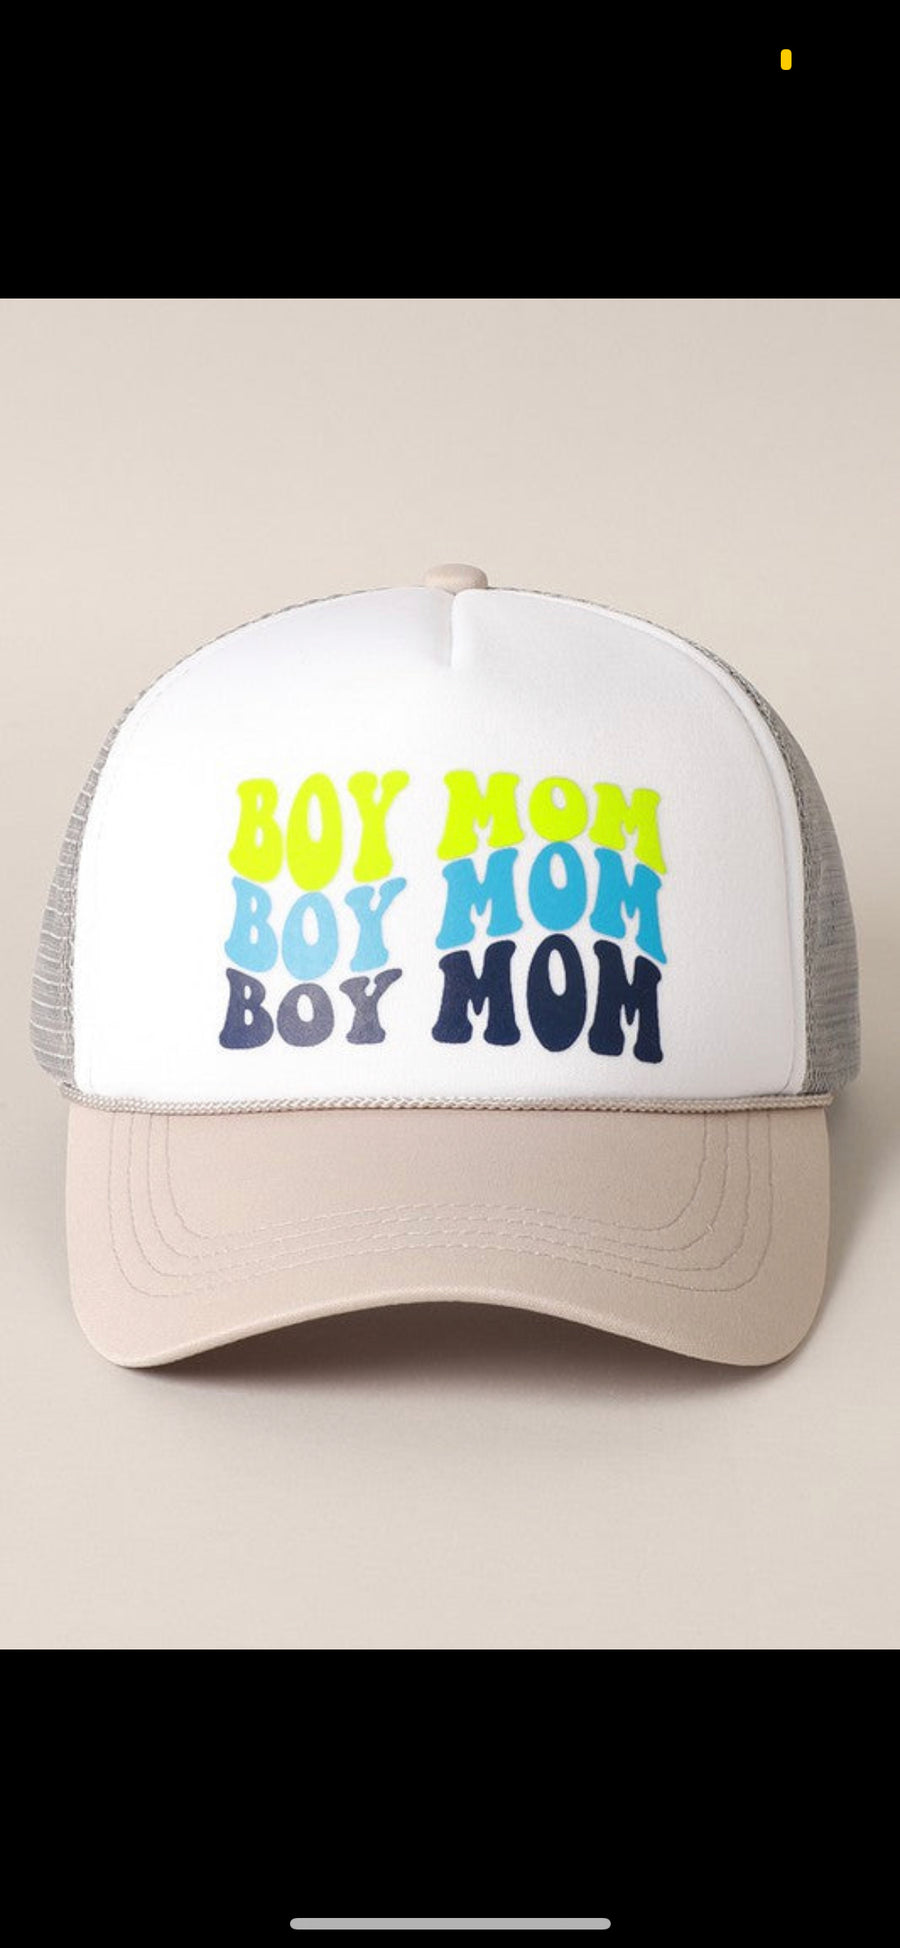 Boy mom trucker hat